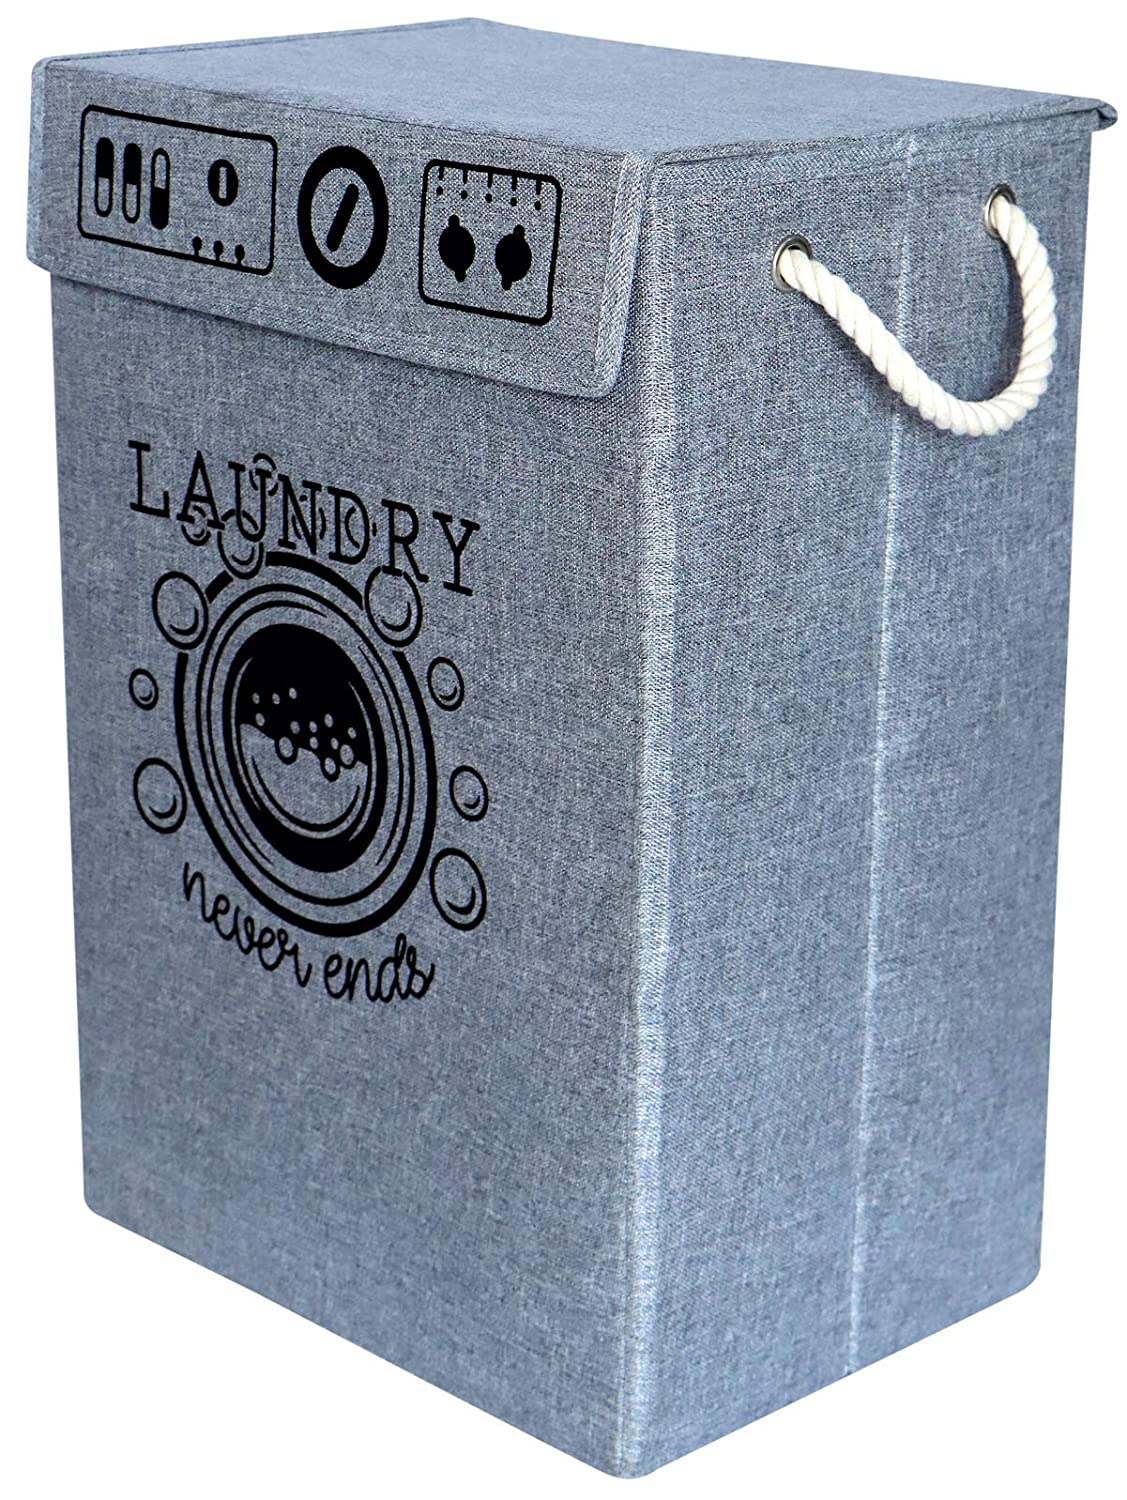 Grey-color-cloth-organizer-loomsmith-foldable-laundry-basket-with-lid-basket-bag-hard-cardboard-72-litres-capacity